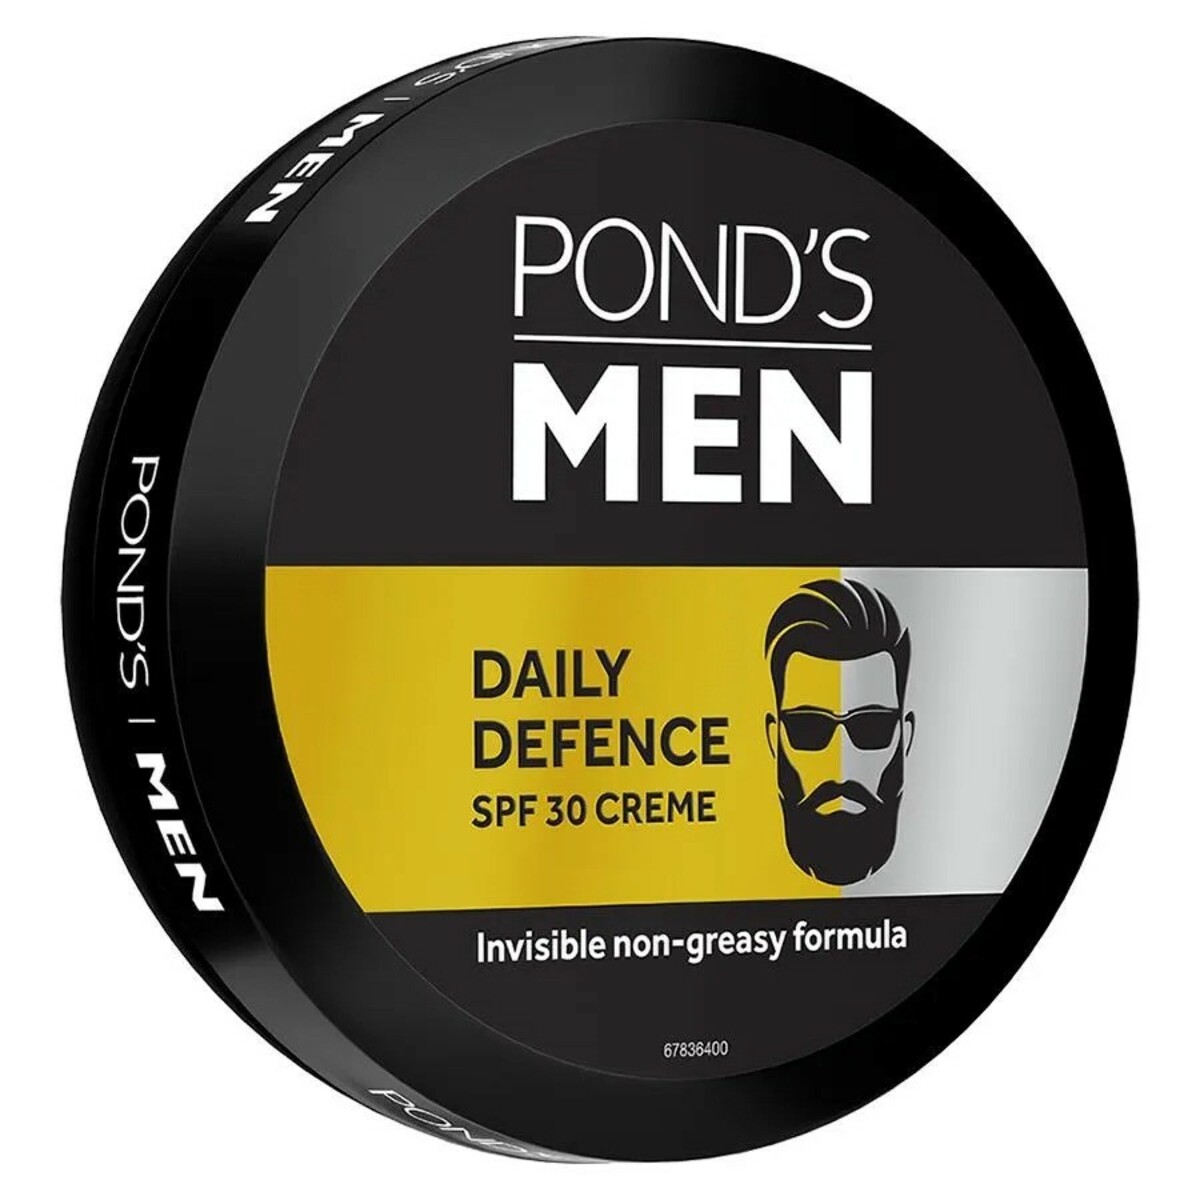 Pond's  Men's Creme Daily Defense Spf 30 55g